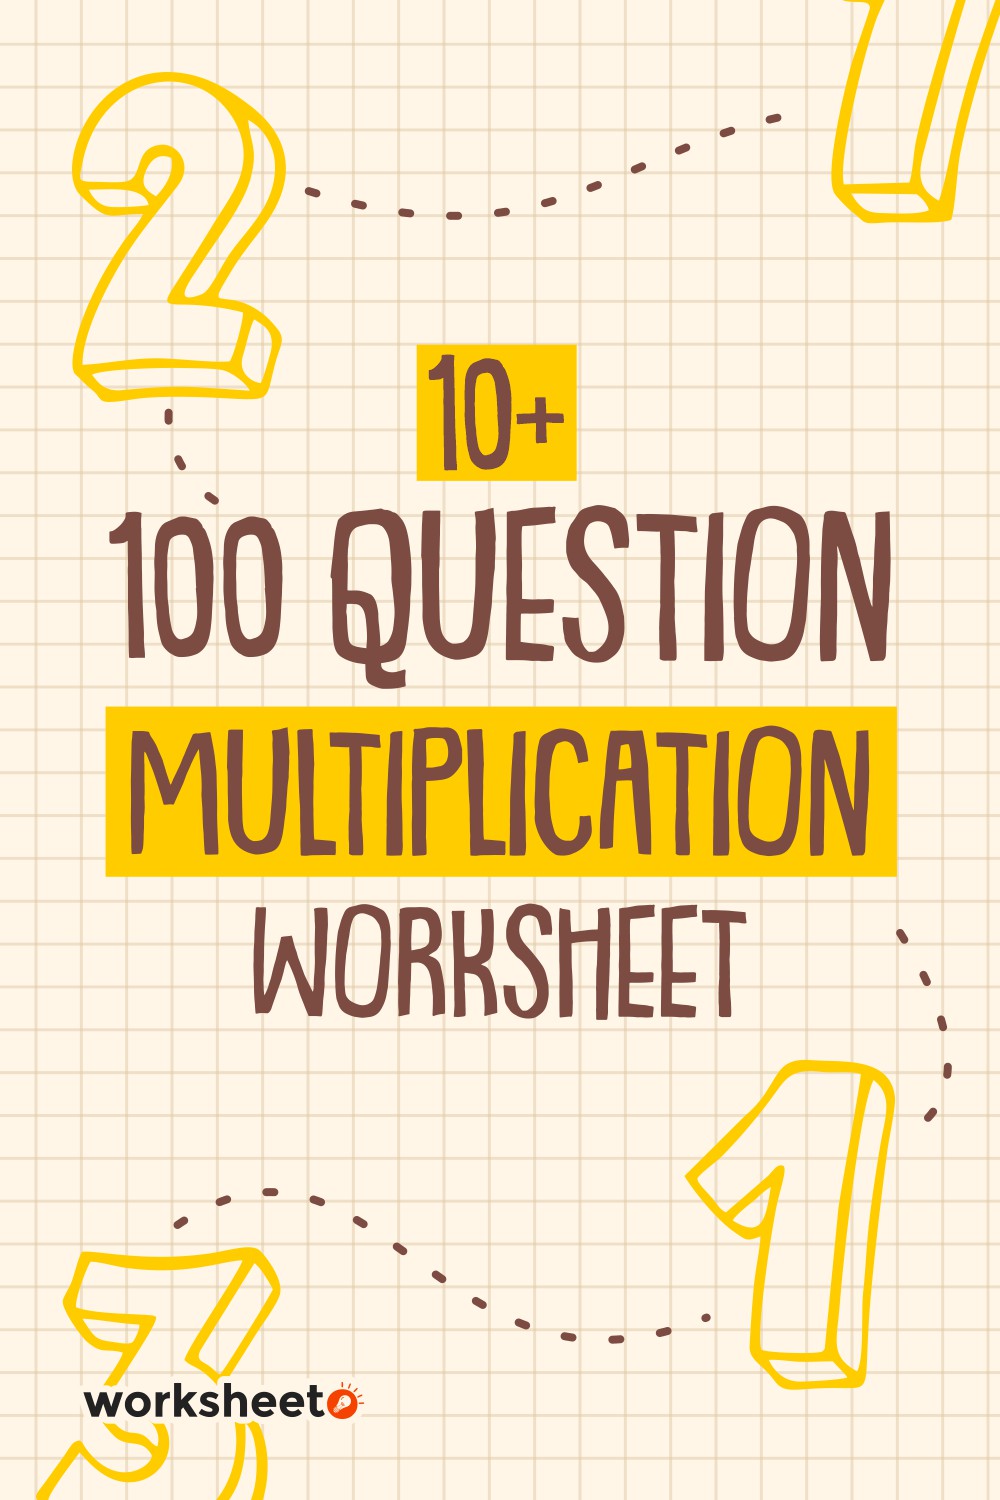 15 Images of 100 Question Multiplication Worksheet